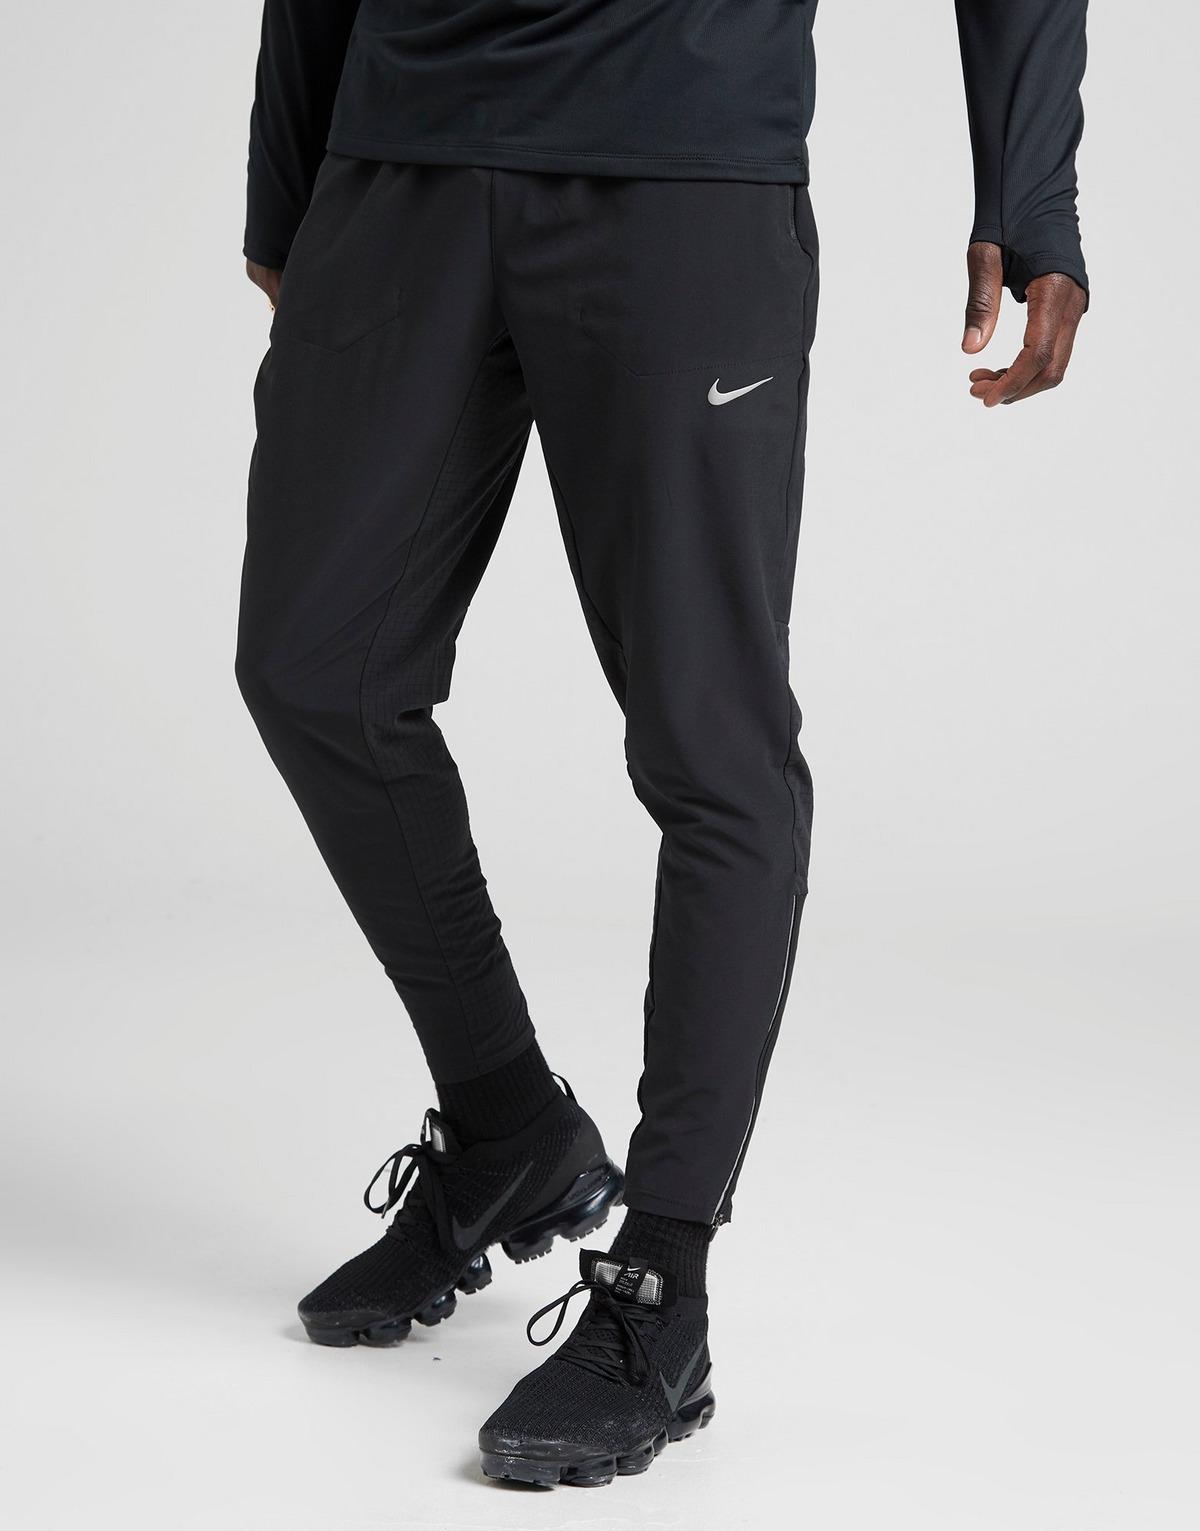 Nike Synthetic Phenom Elite Woven Track Pants in Black/Black (Black ...